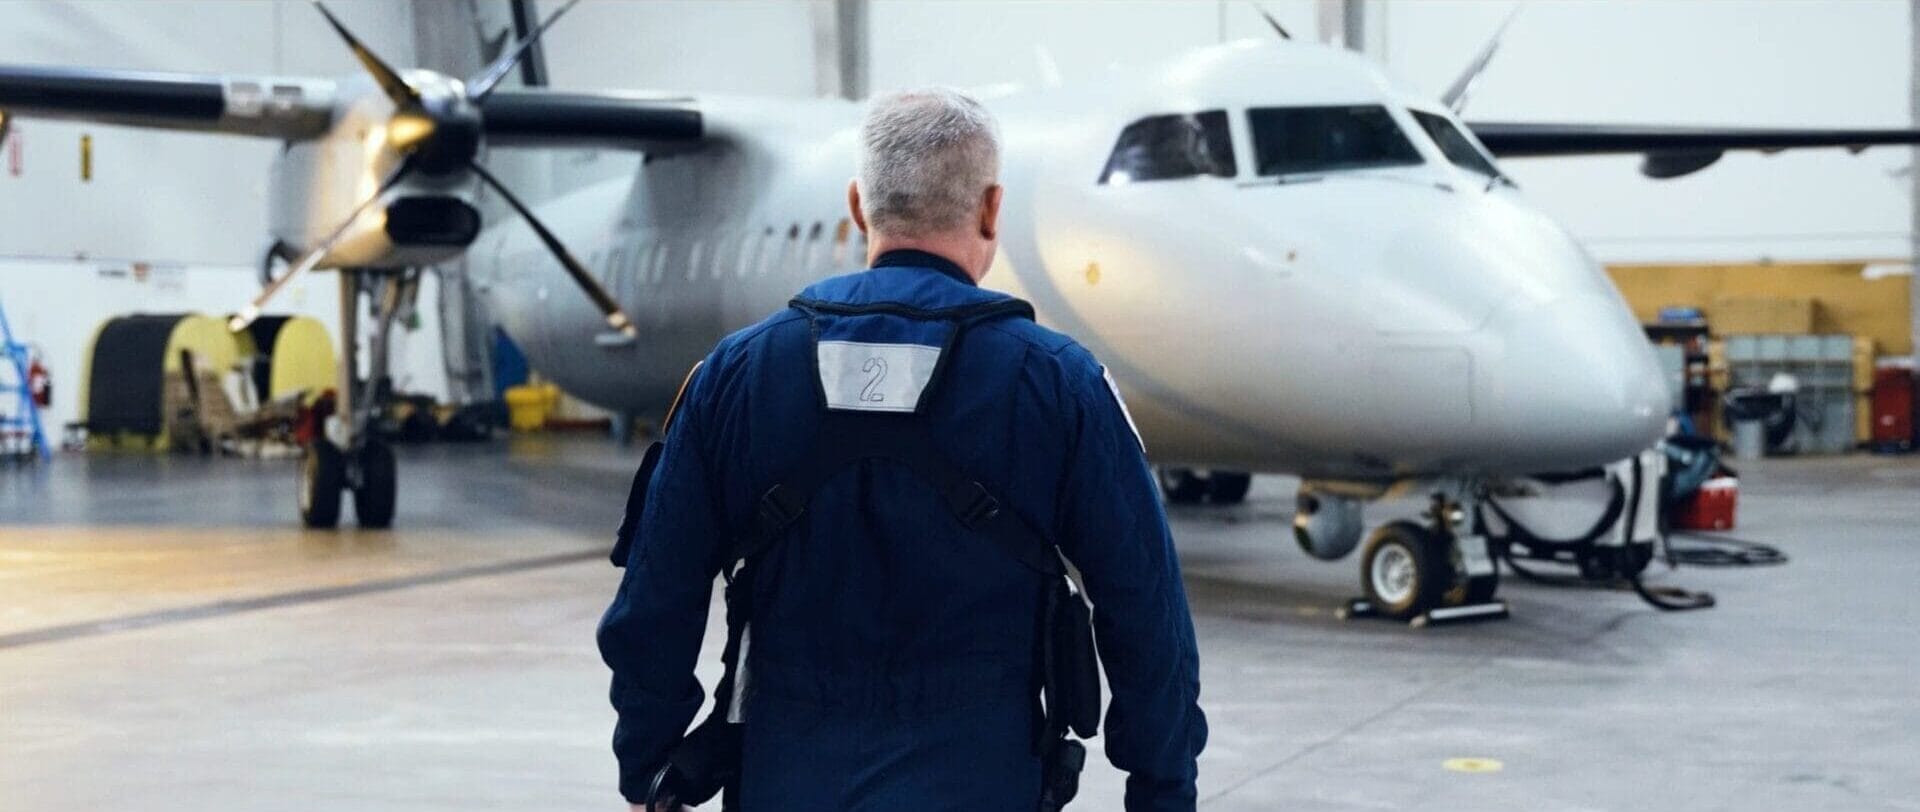 Pilot in flight suit back-on walking toward aircraft in a hangar